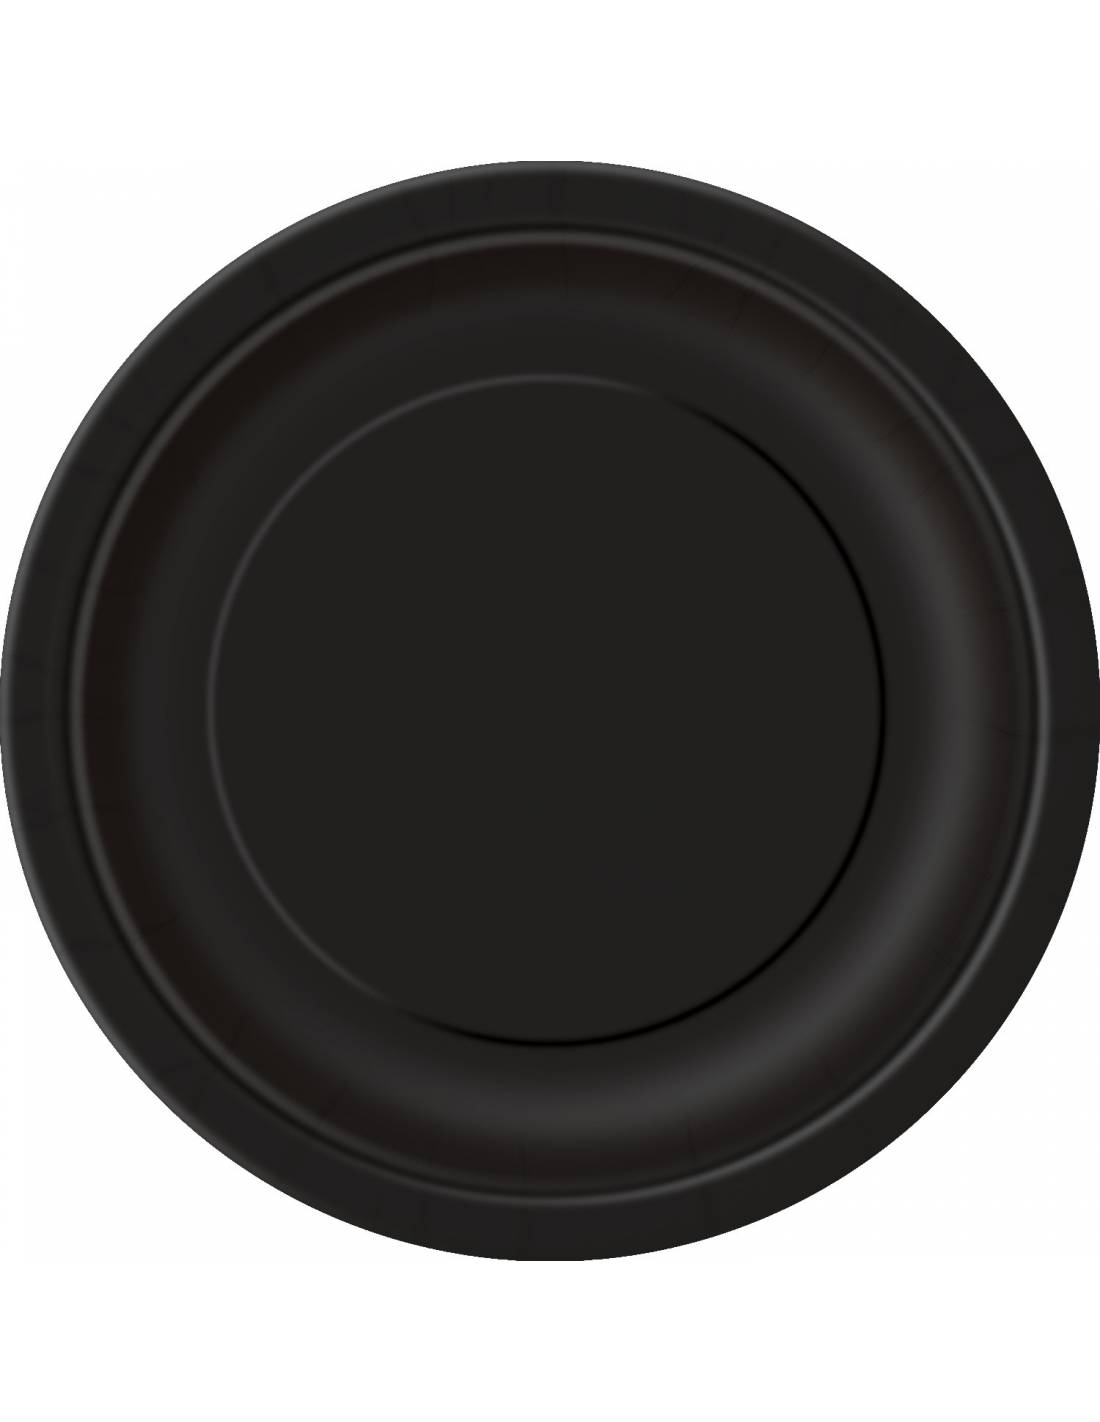 Eco basic black plate